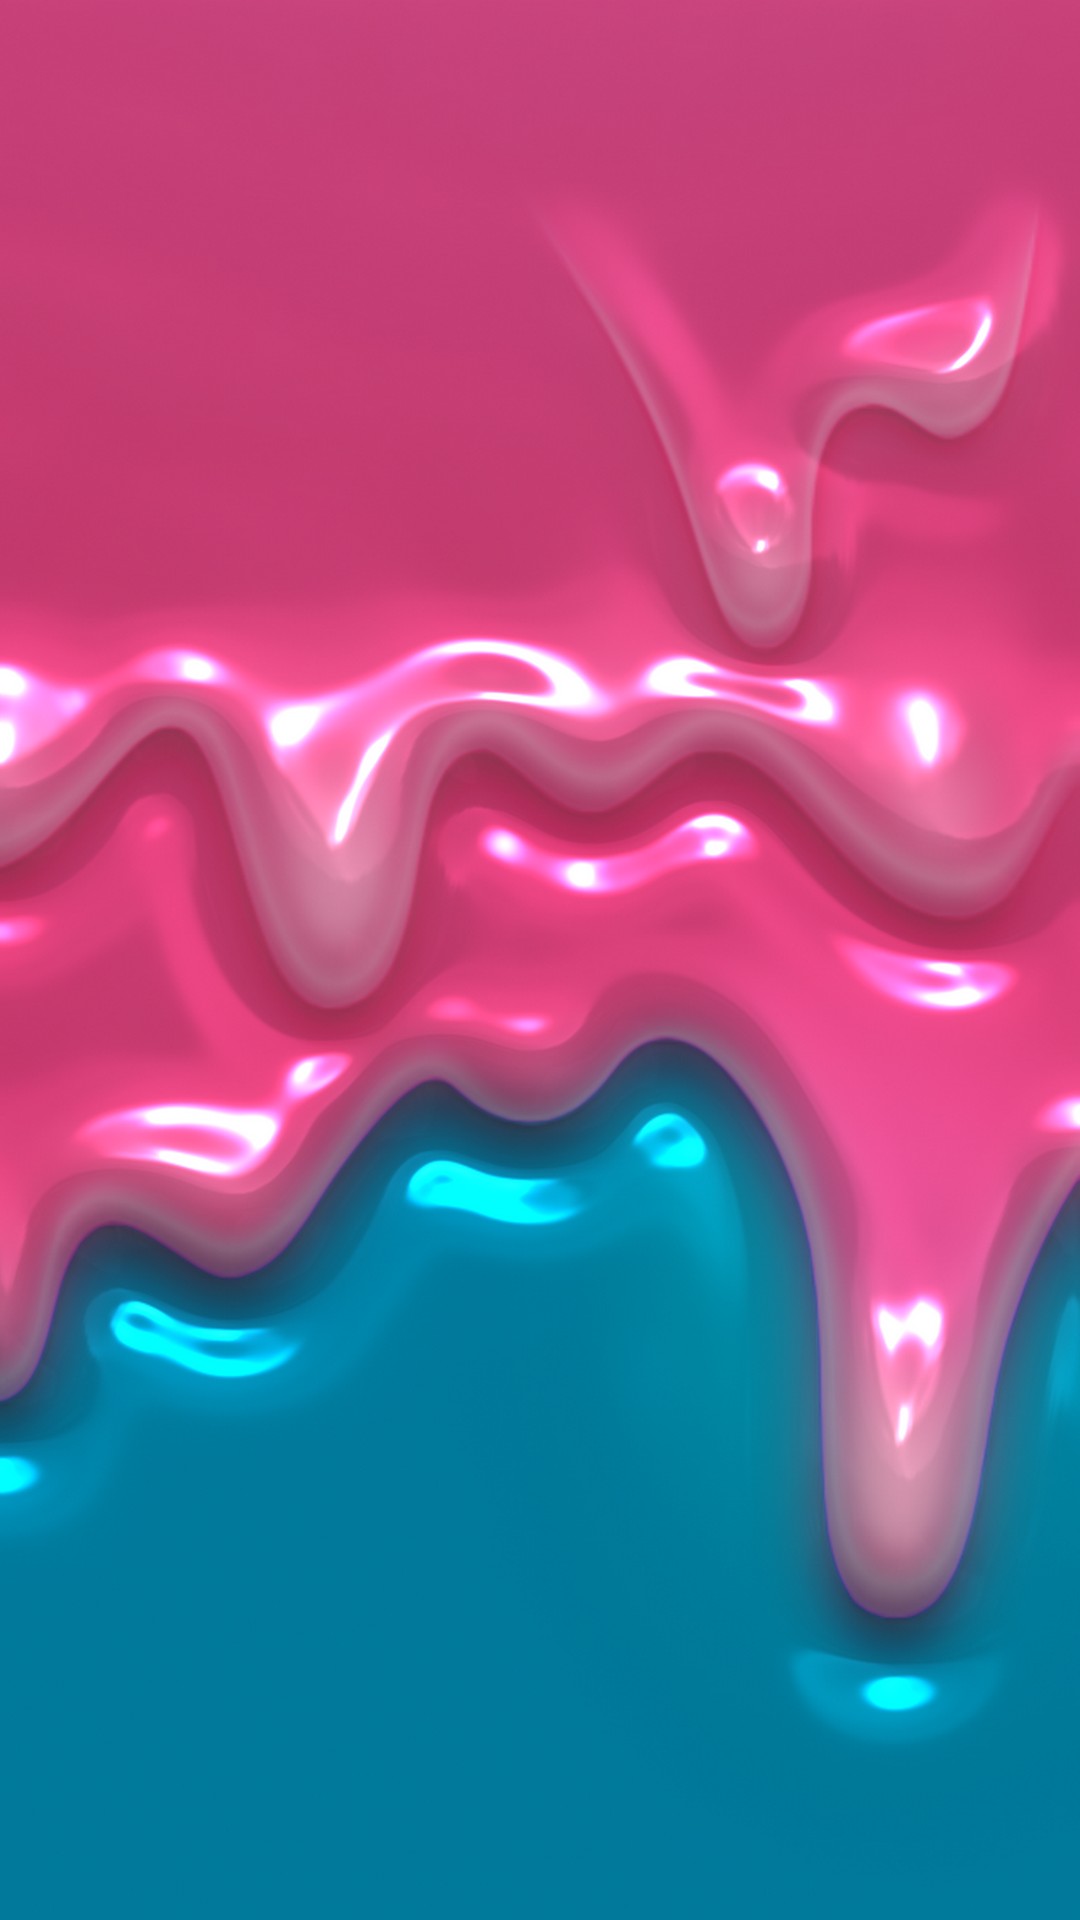 iPhone X Pink Liquid Wallpaper